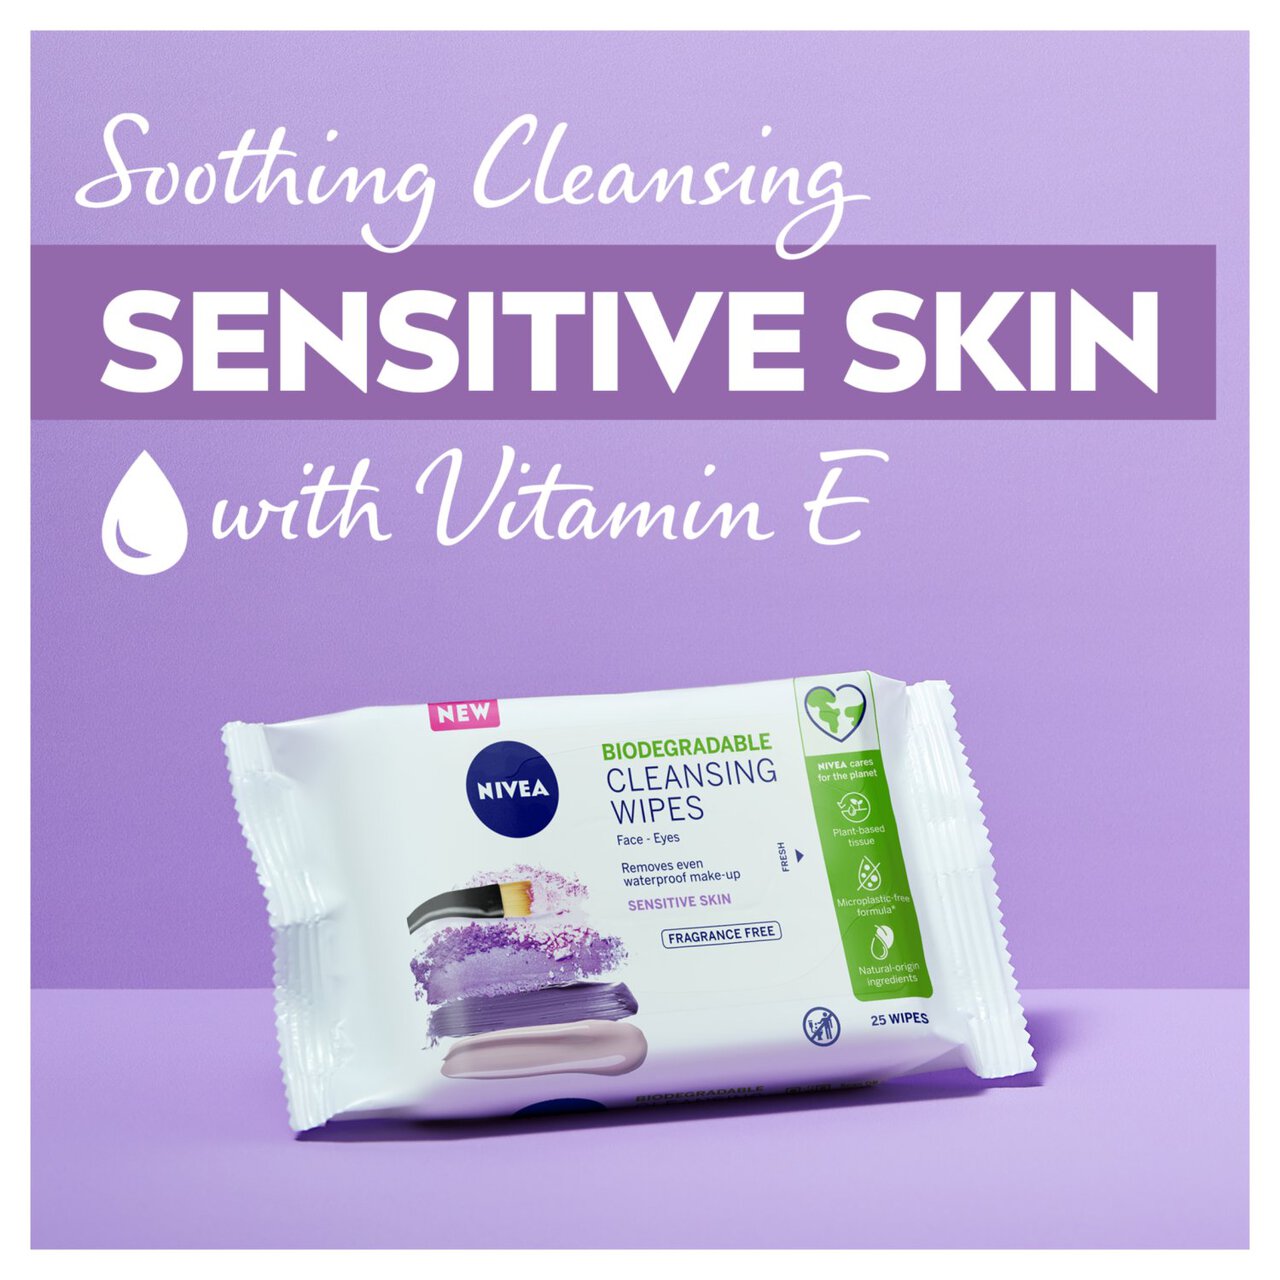 NIVEA Biodegradable Sensitive Cleansing Face Wipes 25 per pack